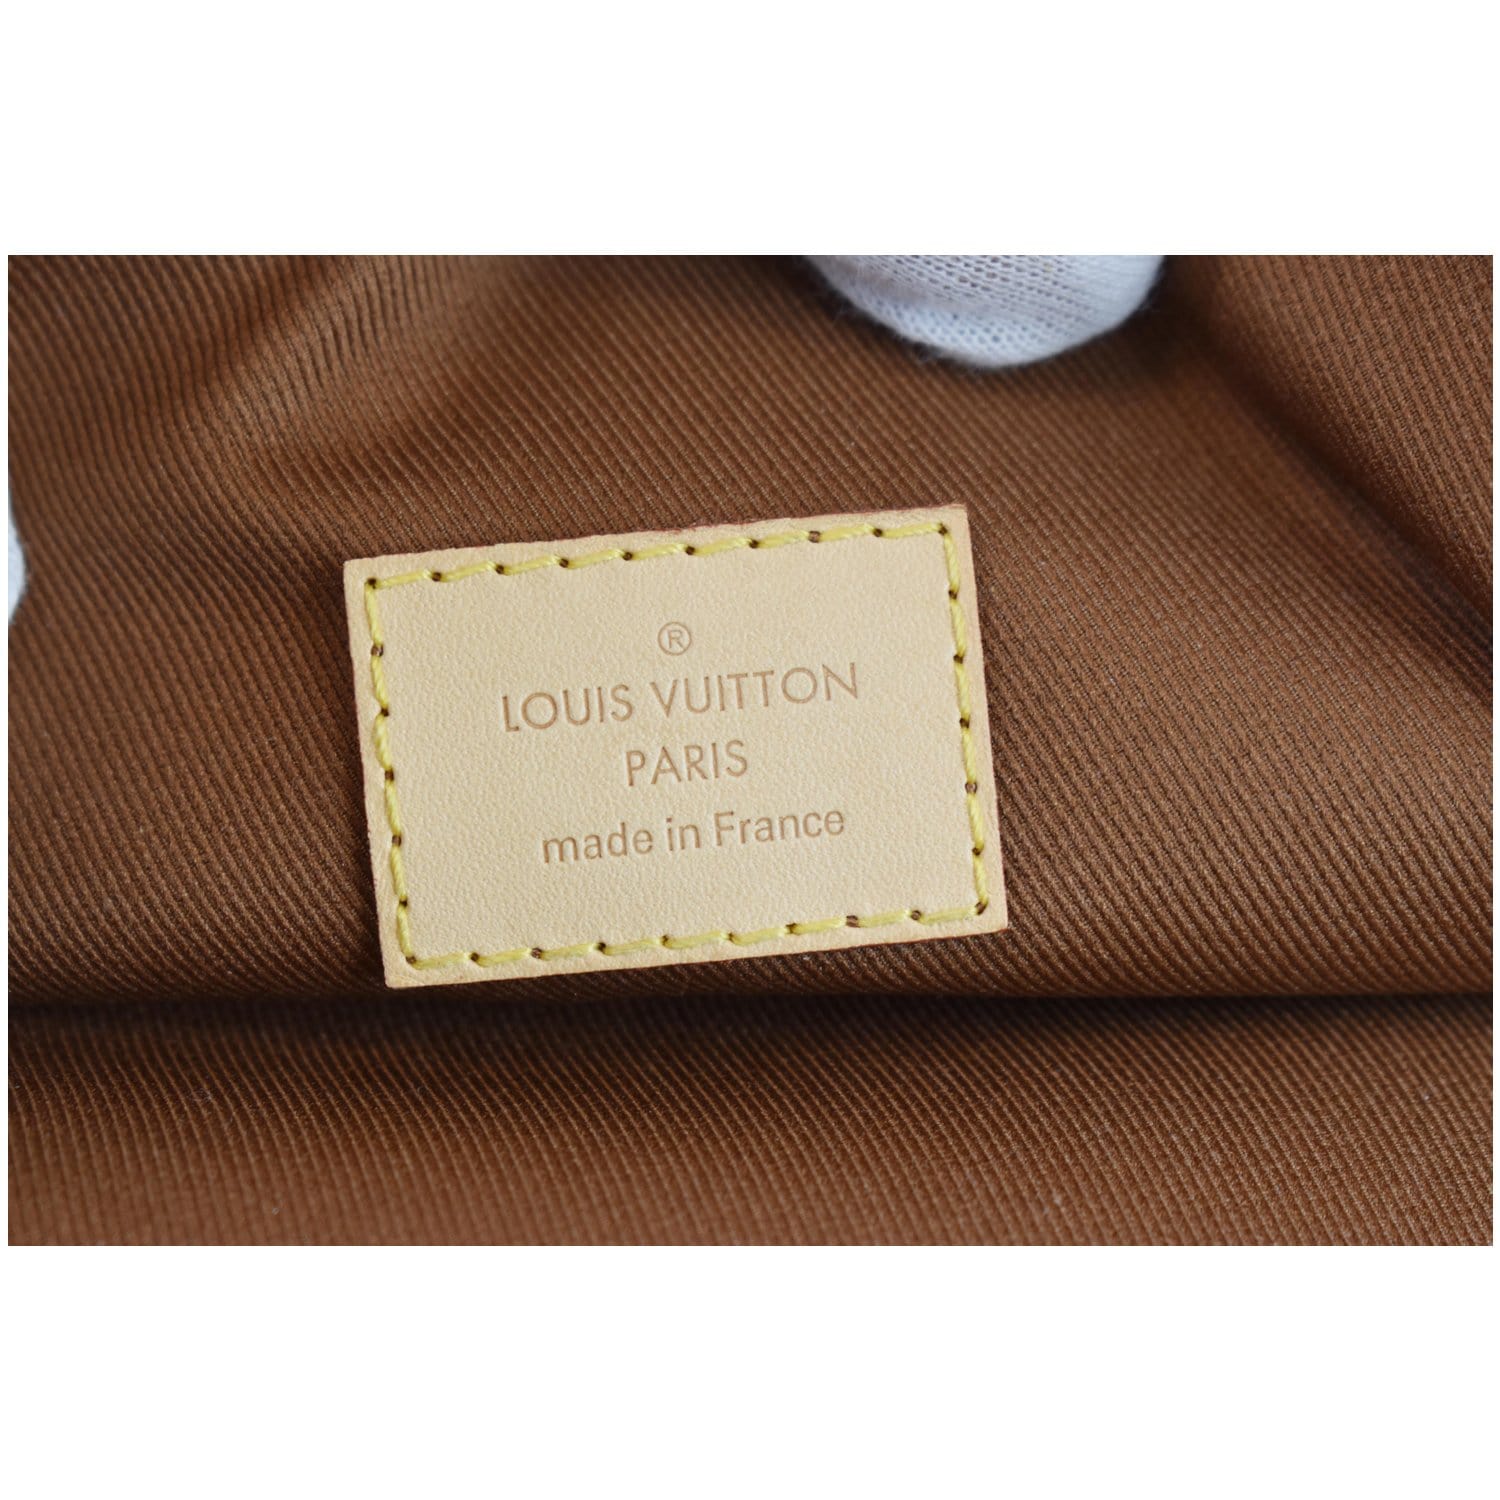 Shop Louis Vuitton Etui voyage pm (M44500) by MUTIARA